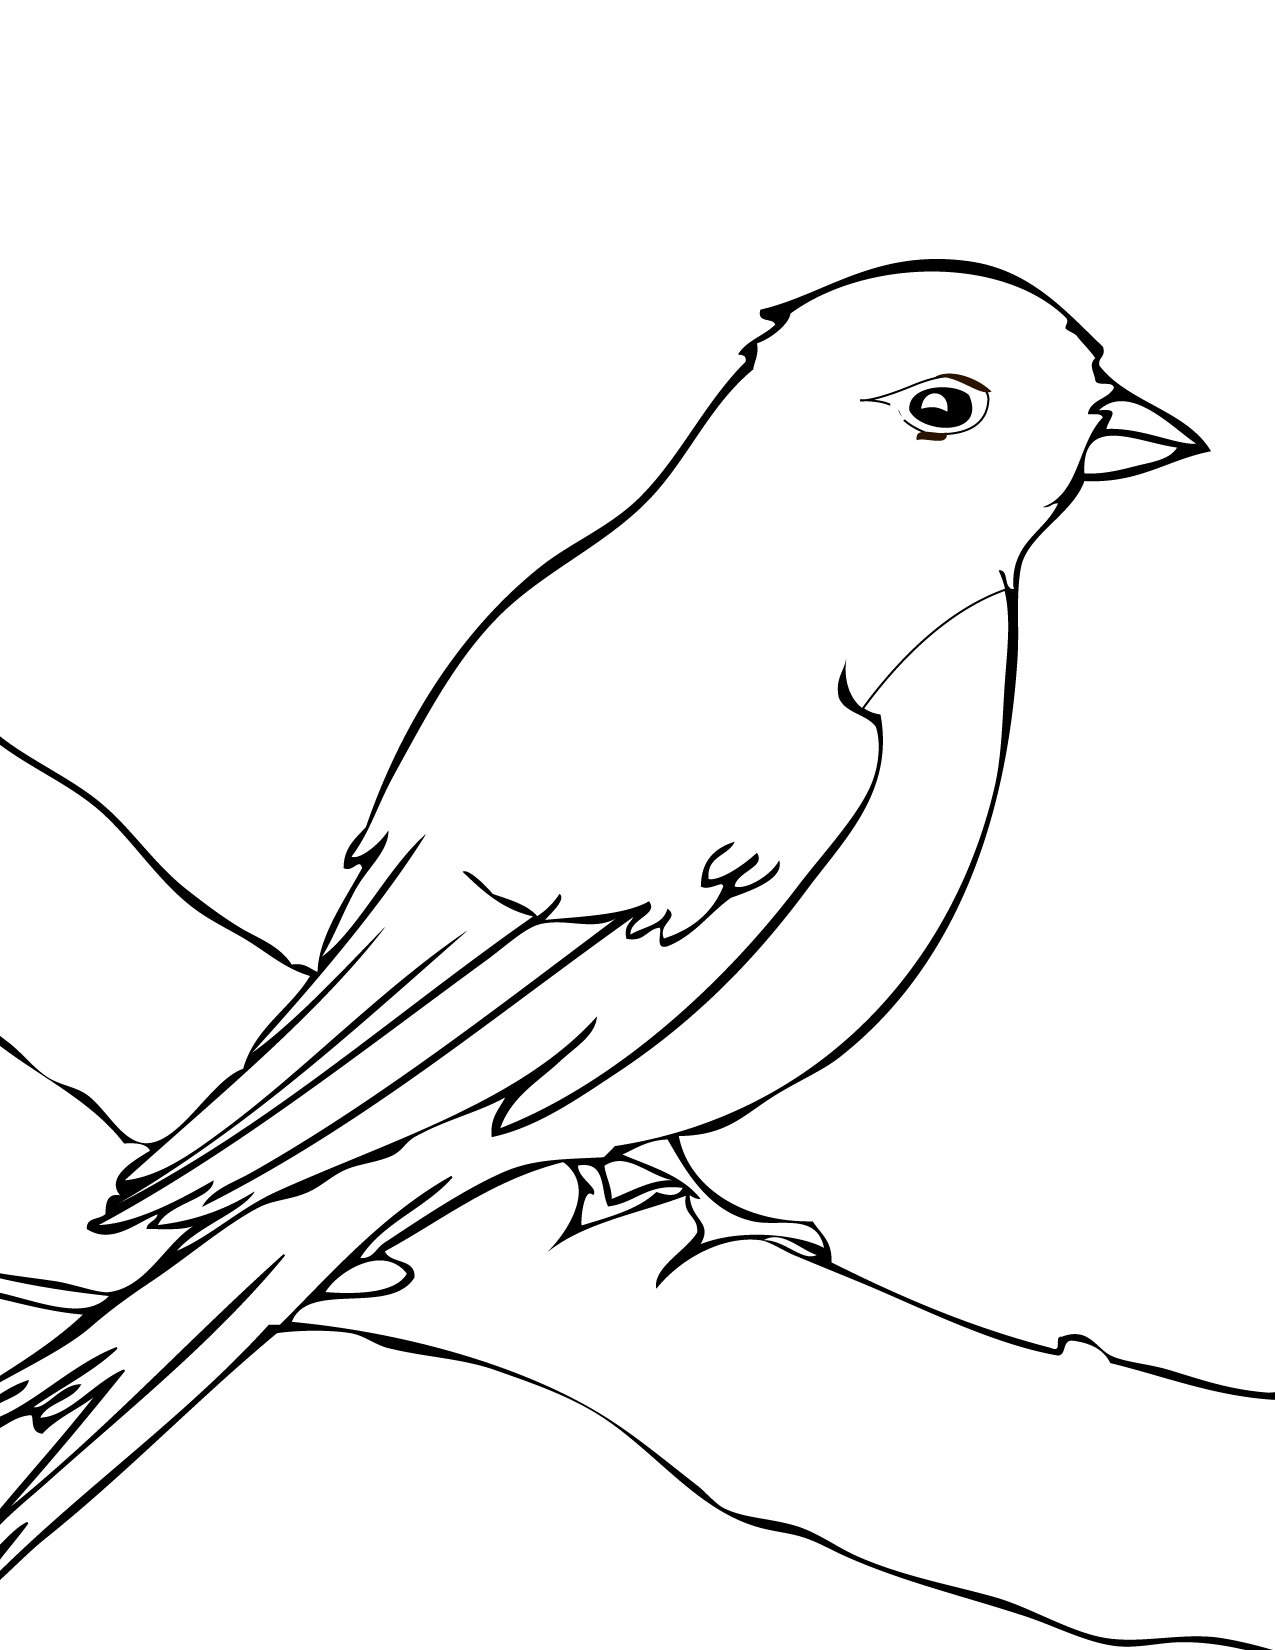 Blackbird coloring #18, Download drawings